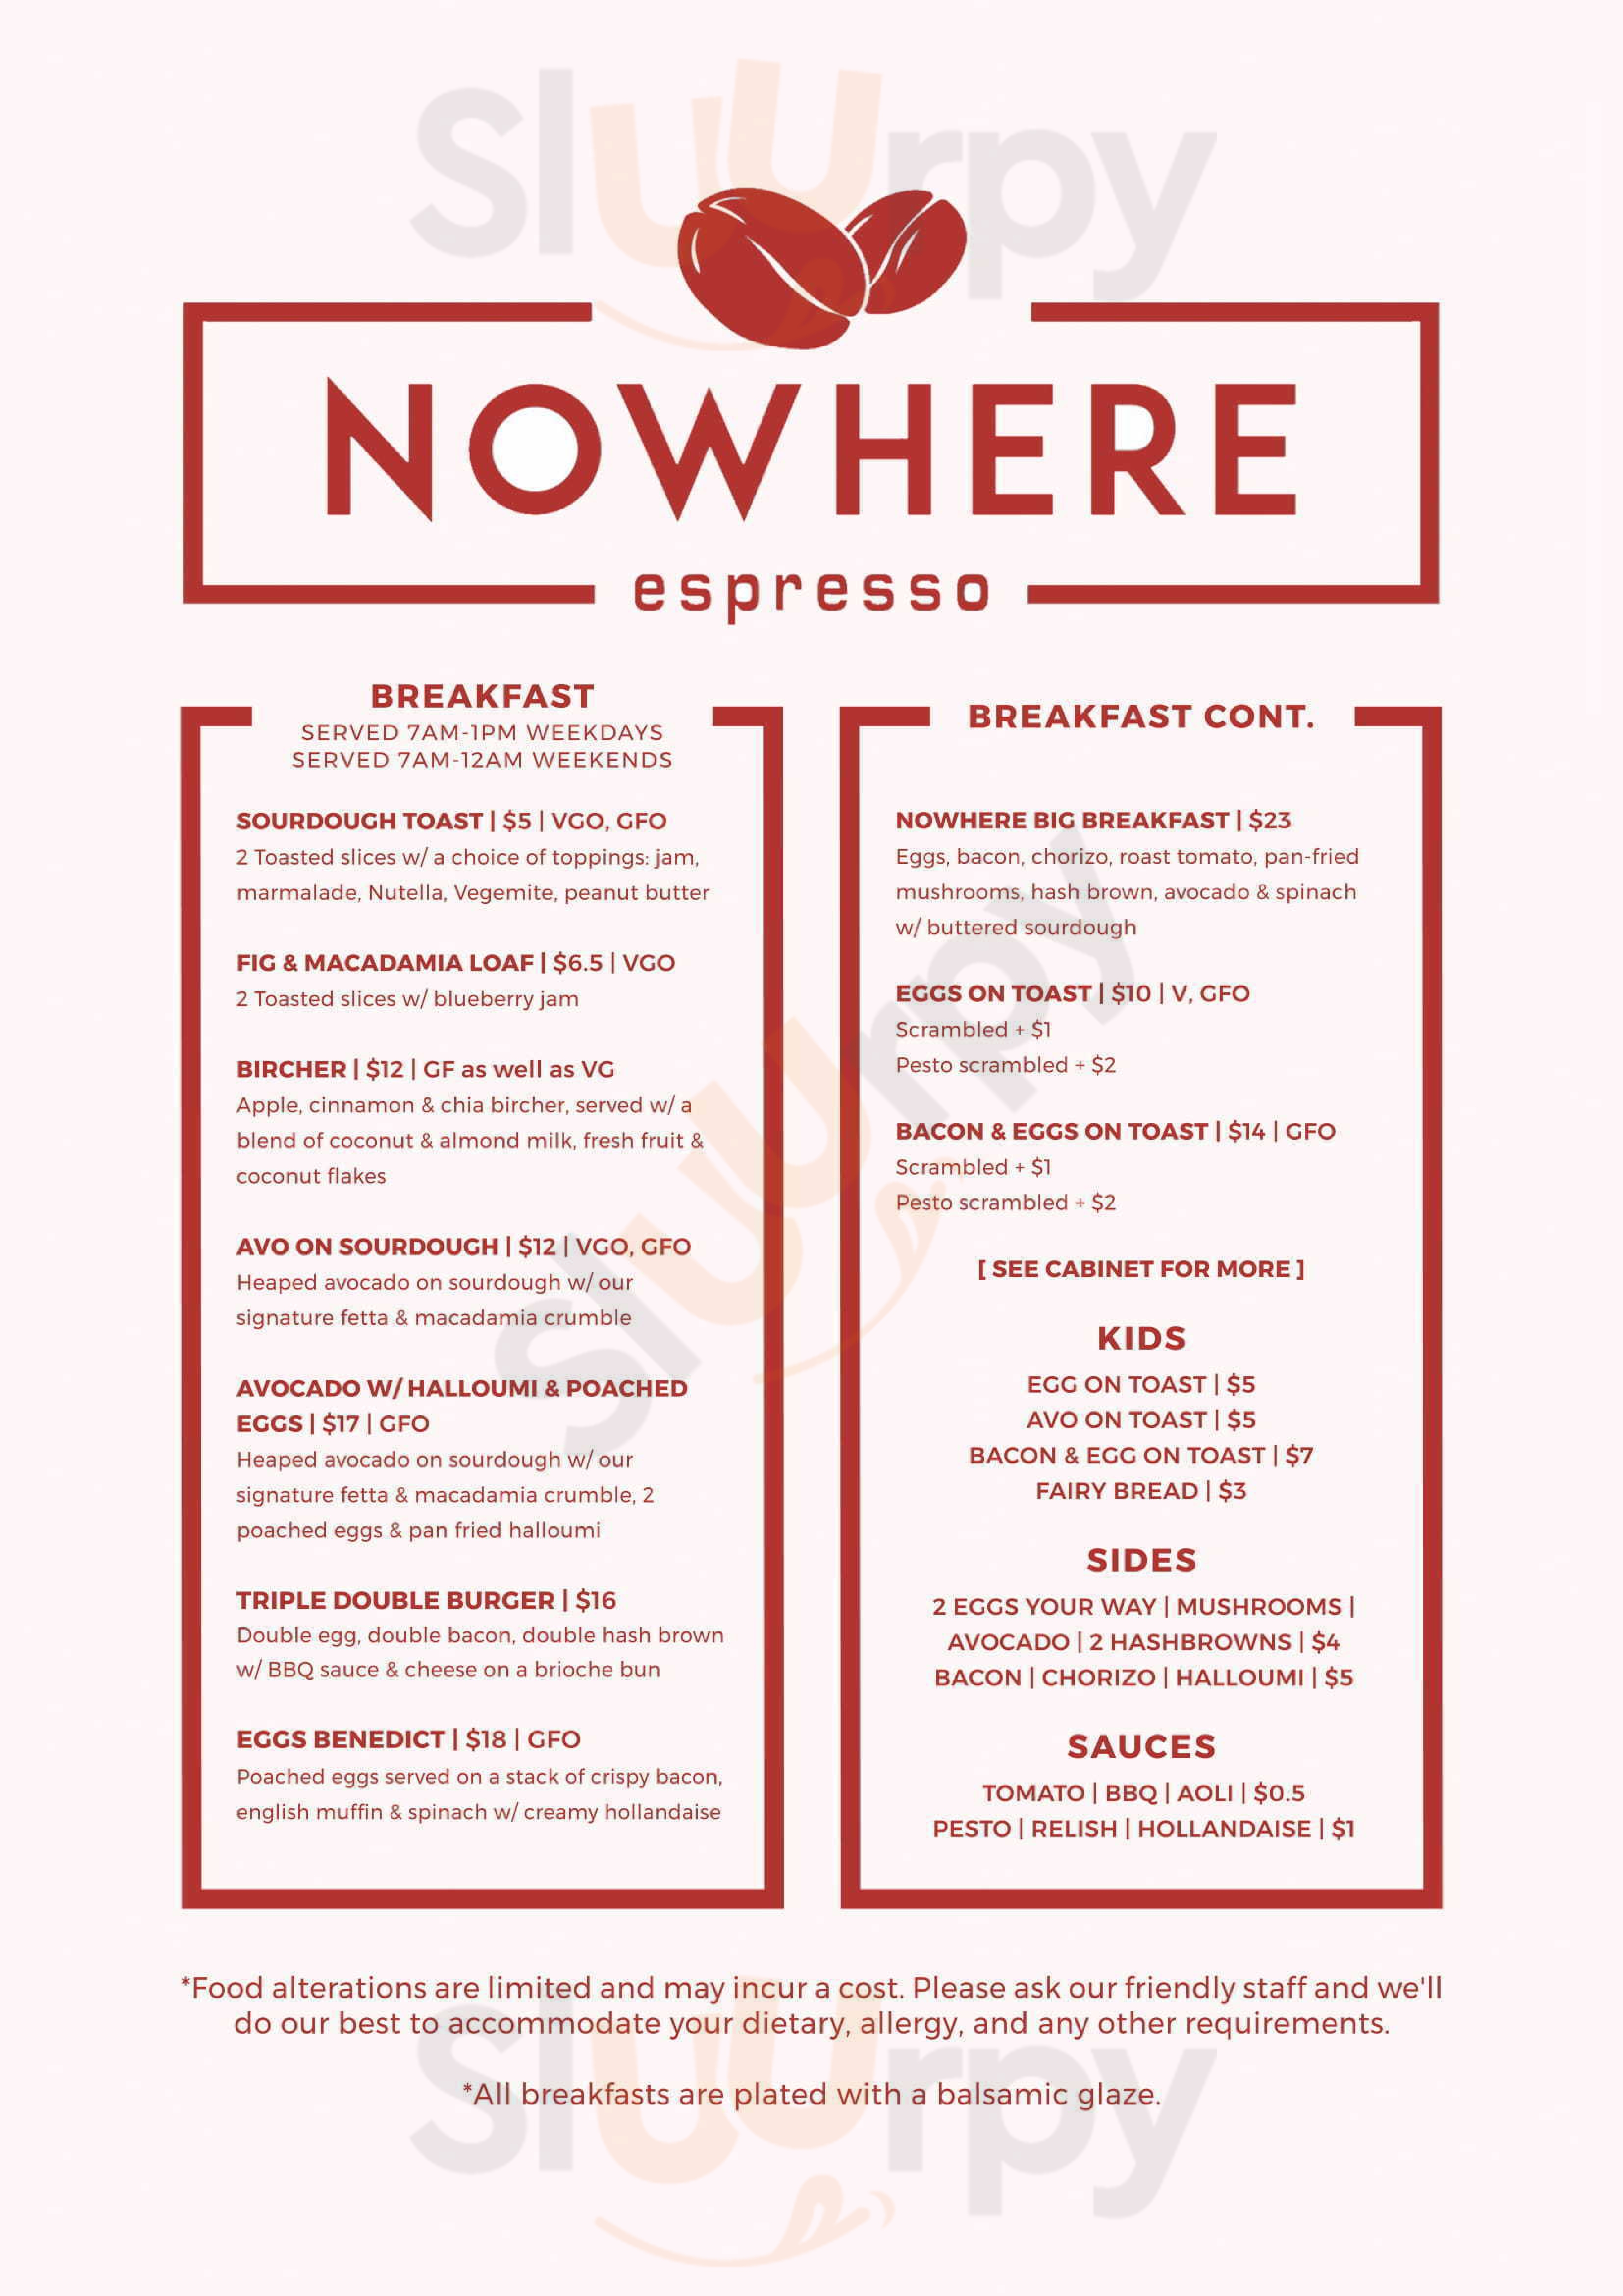 Nowhere Espresso Brisbane Menu - 1